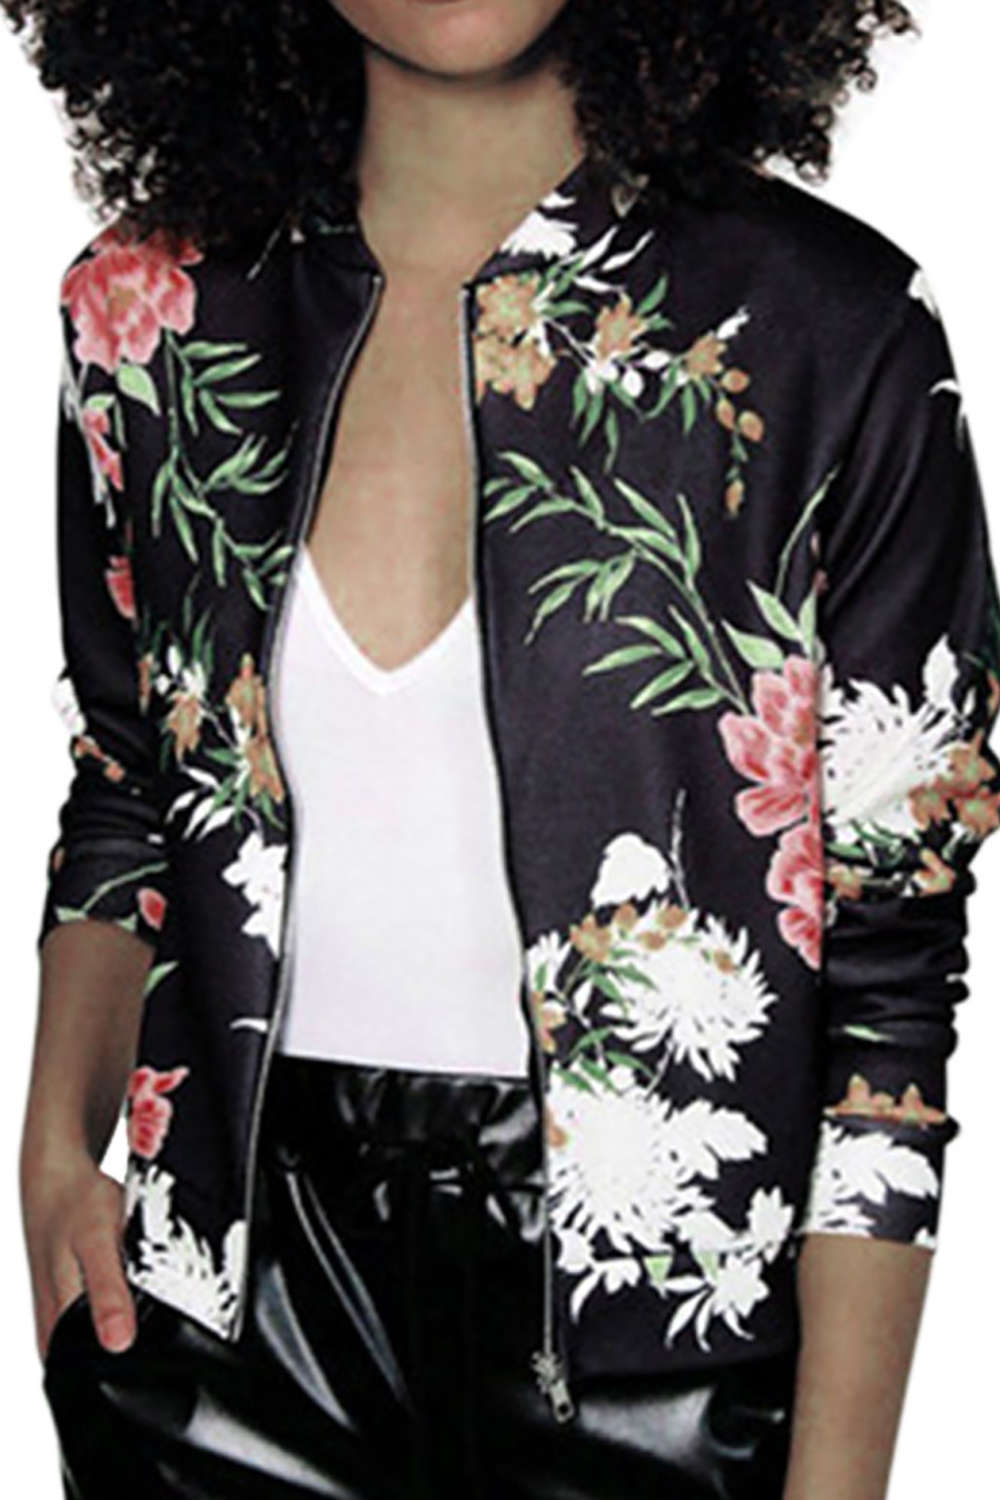 Iyasson Floral Printed Bomber Jacket